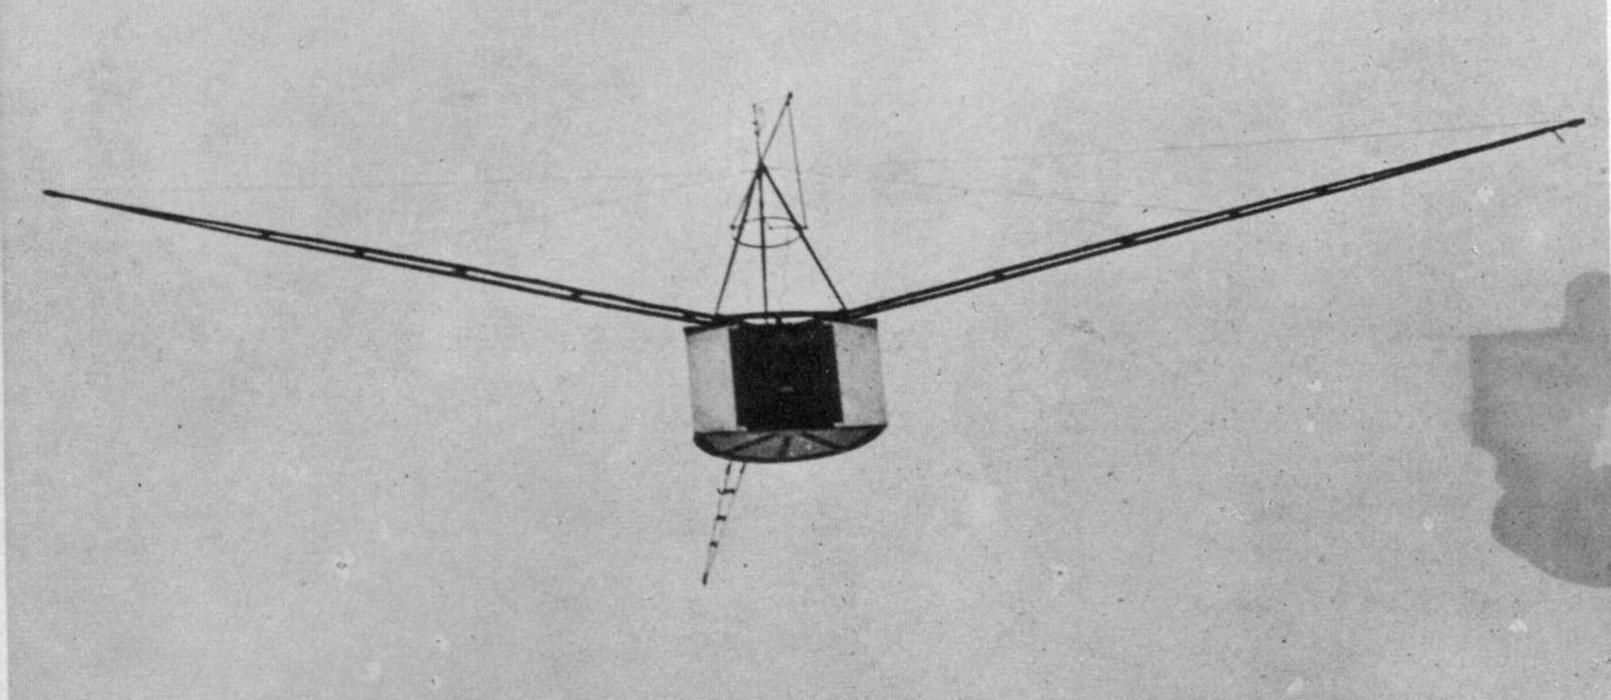 The Kite-Borne Camera That Captured Post-Quake San Francisco In 1906